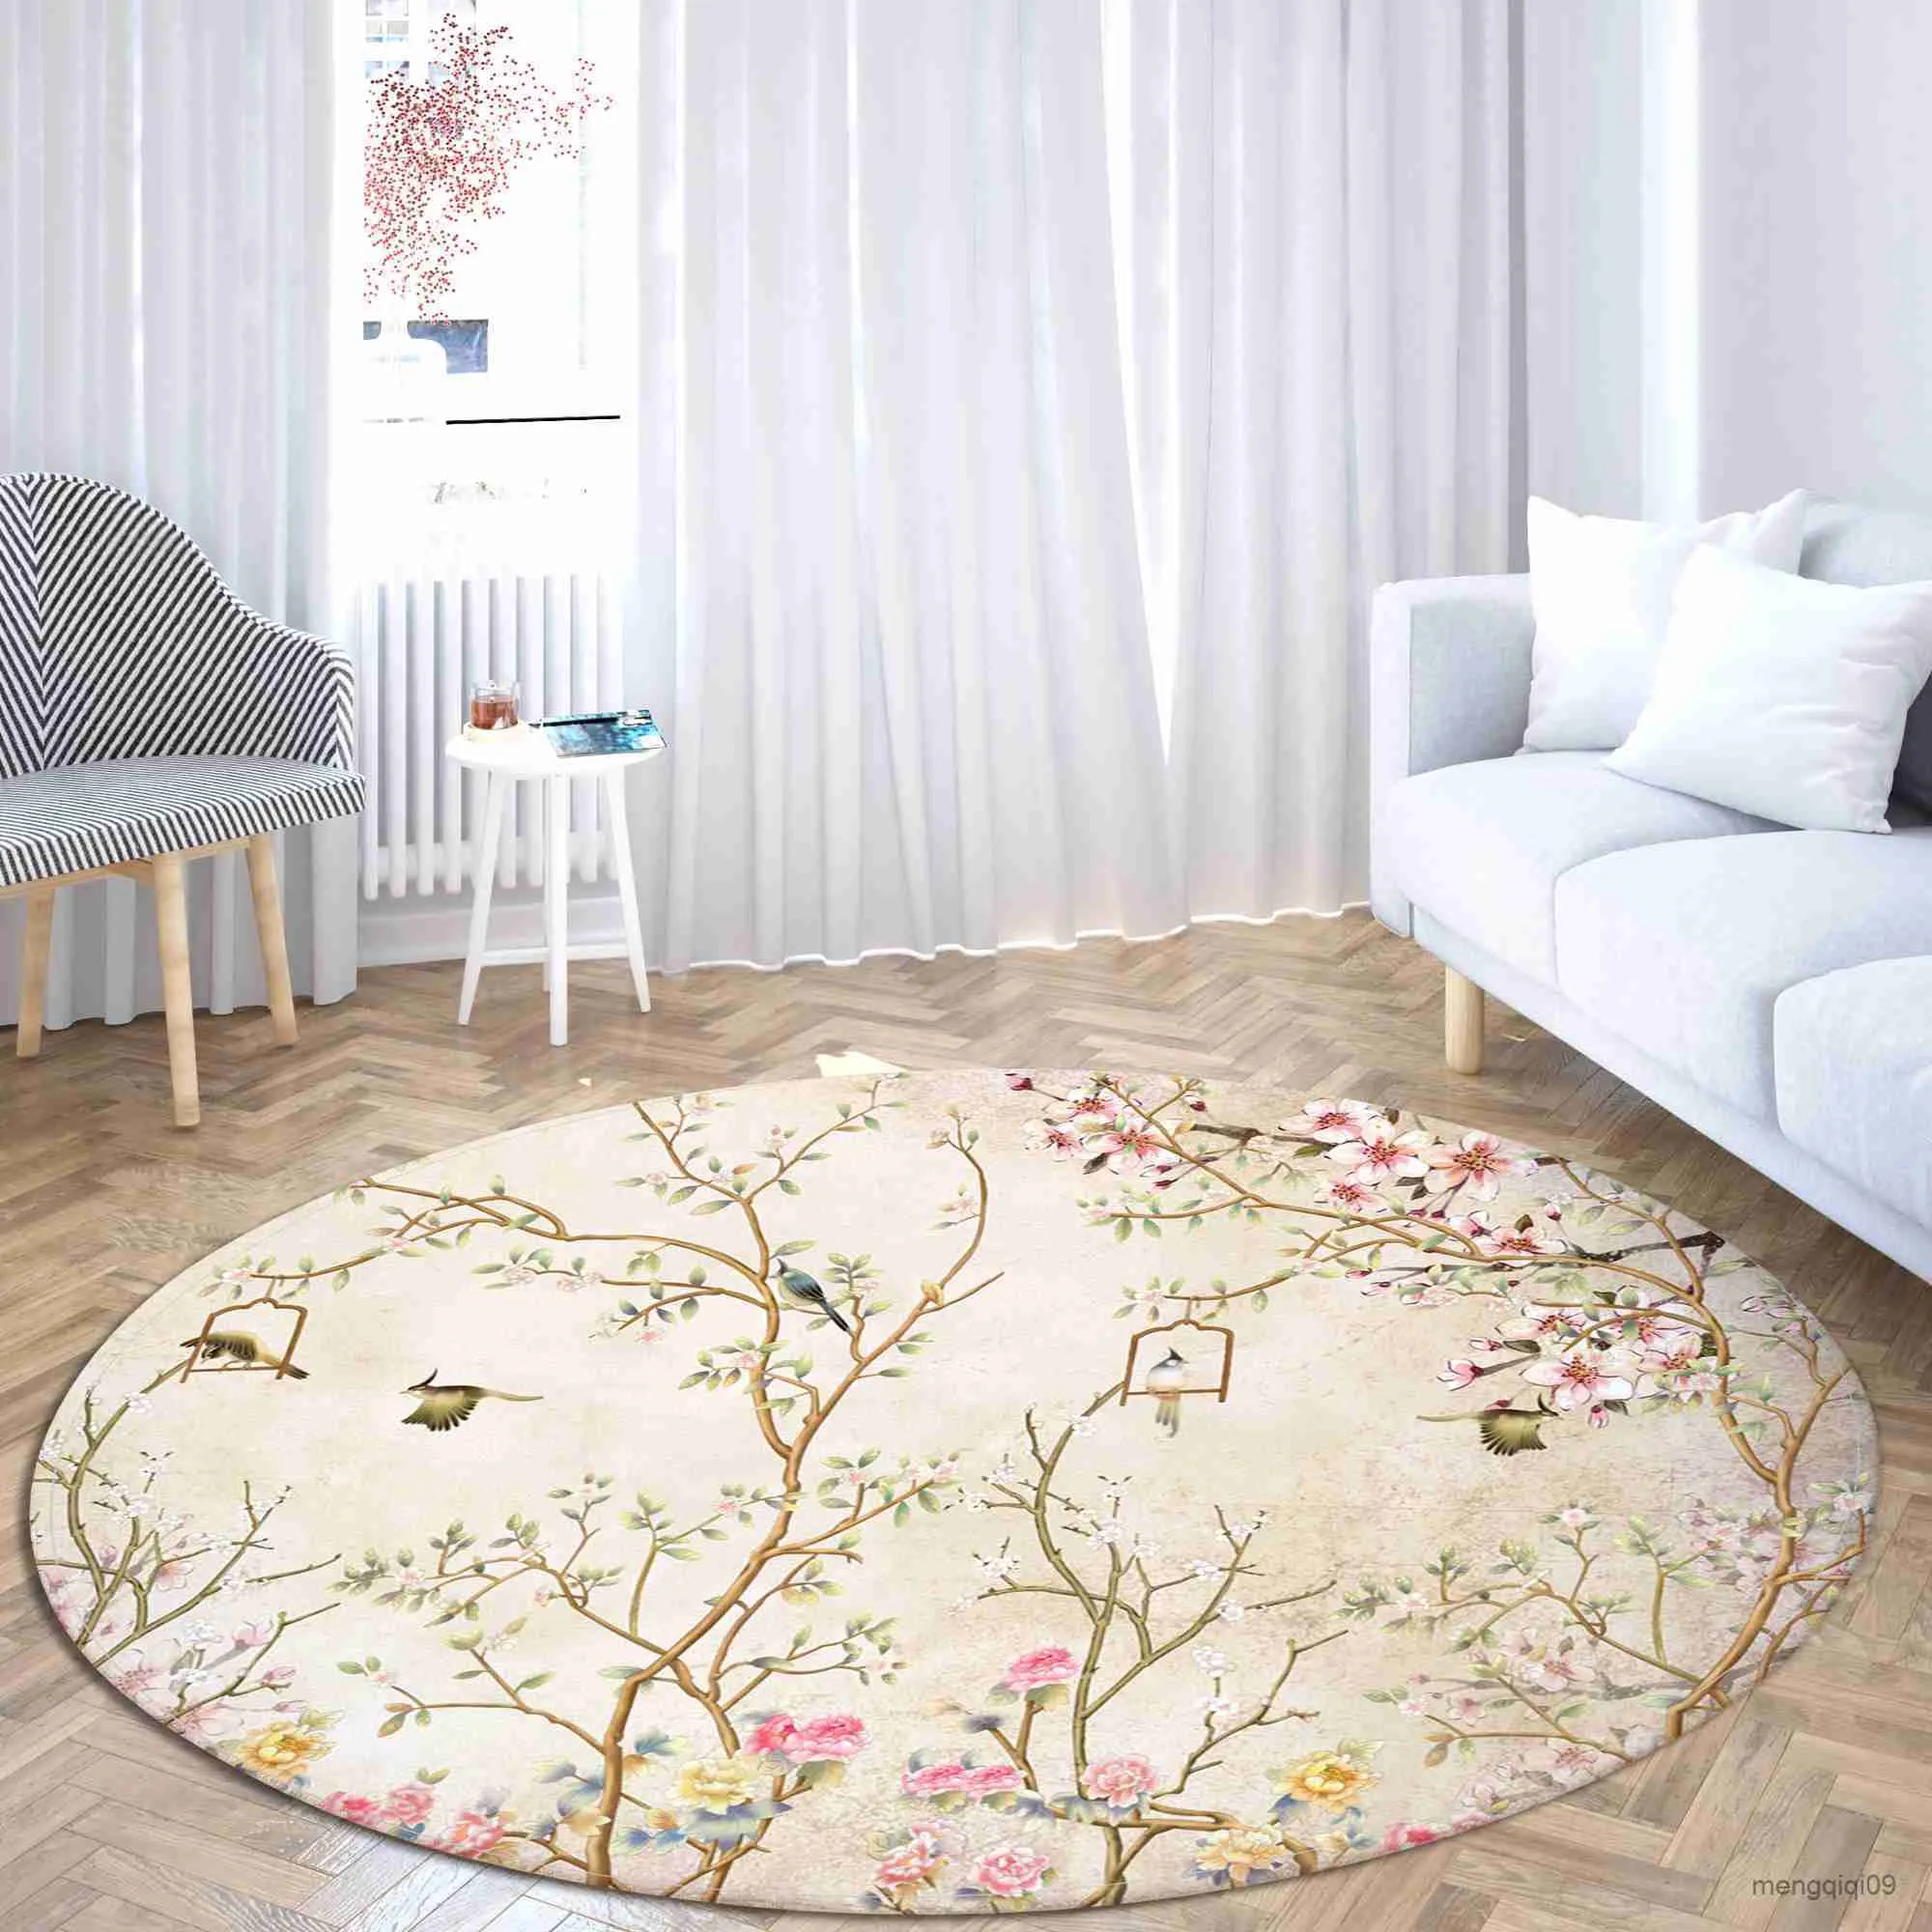 Carpets Round Pink Flowers Area Rugs Large Anti Slip Soft Home Living Room Bedroom Bathroom Floor Mats Print Decorate Carpet R230726